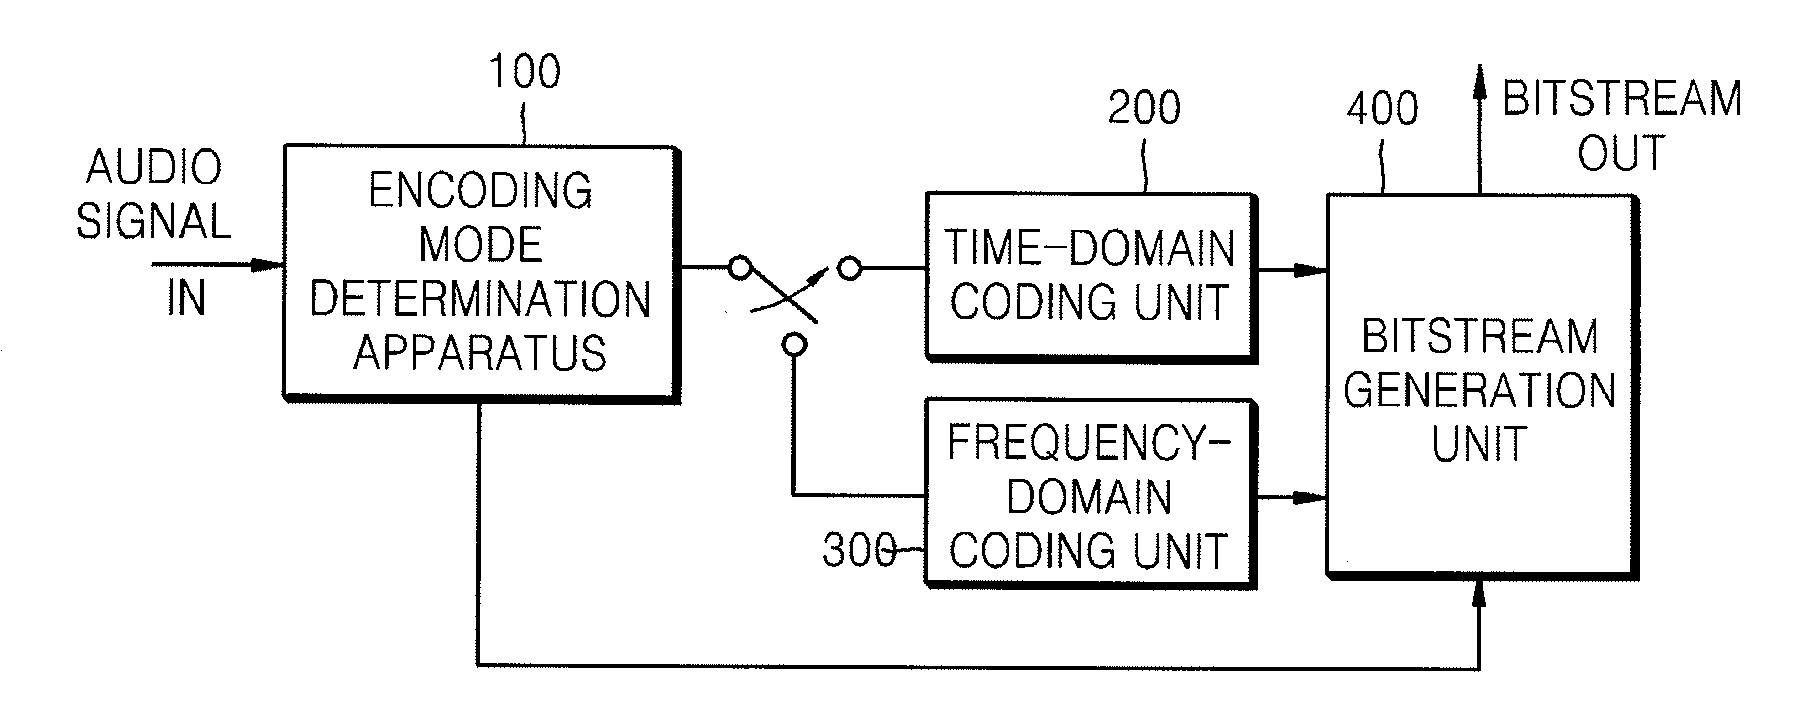 Method and apparatus to determine encoding mode of audio signal and method and apparatus to encode and/or decode audio signal using the encoding mode determination method and apparatus